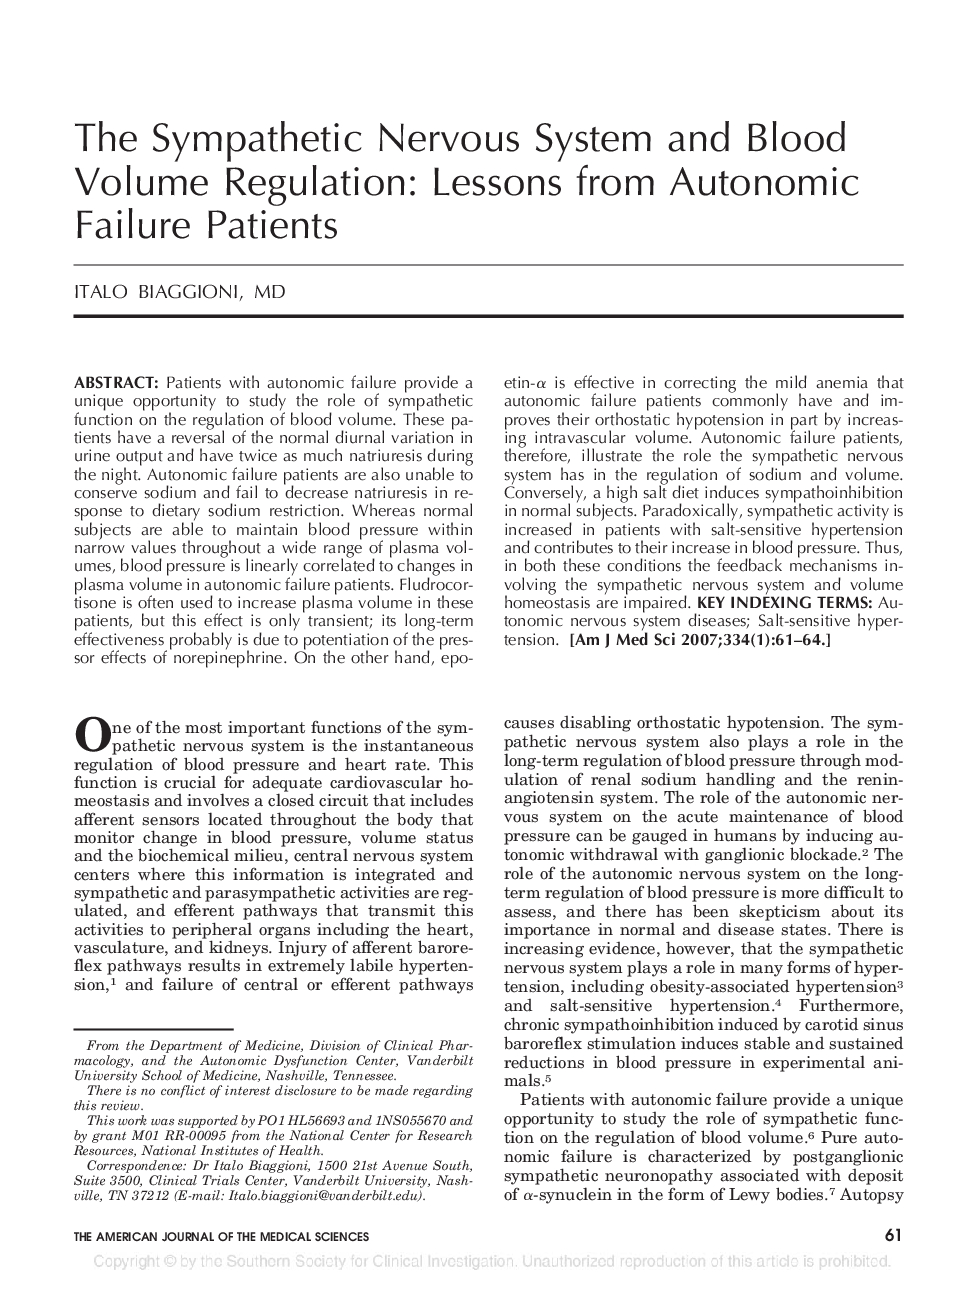 The Sympathetic Nervous System and Blood Volume Regulation: Lessons from Autonomic Failure Patients